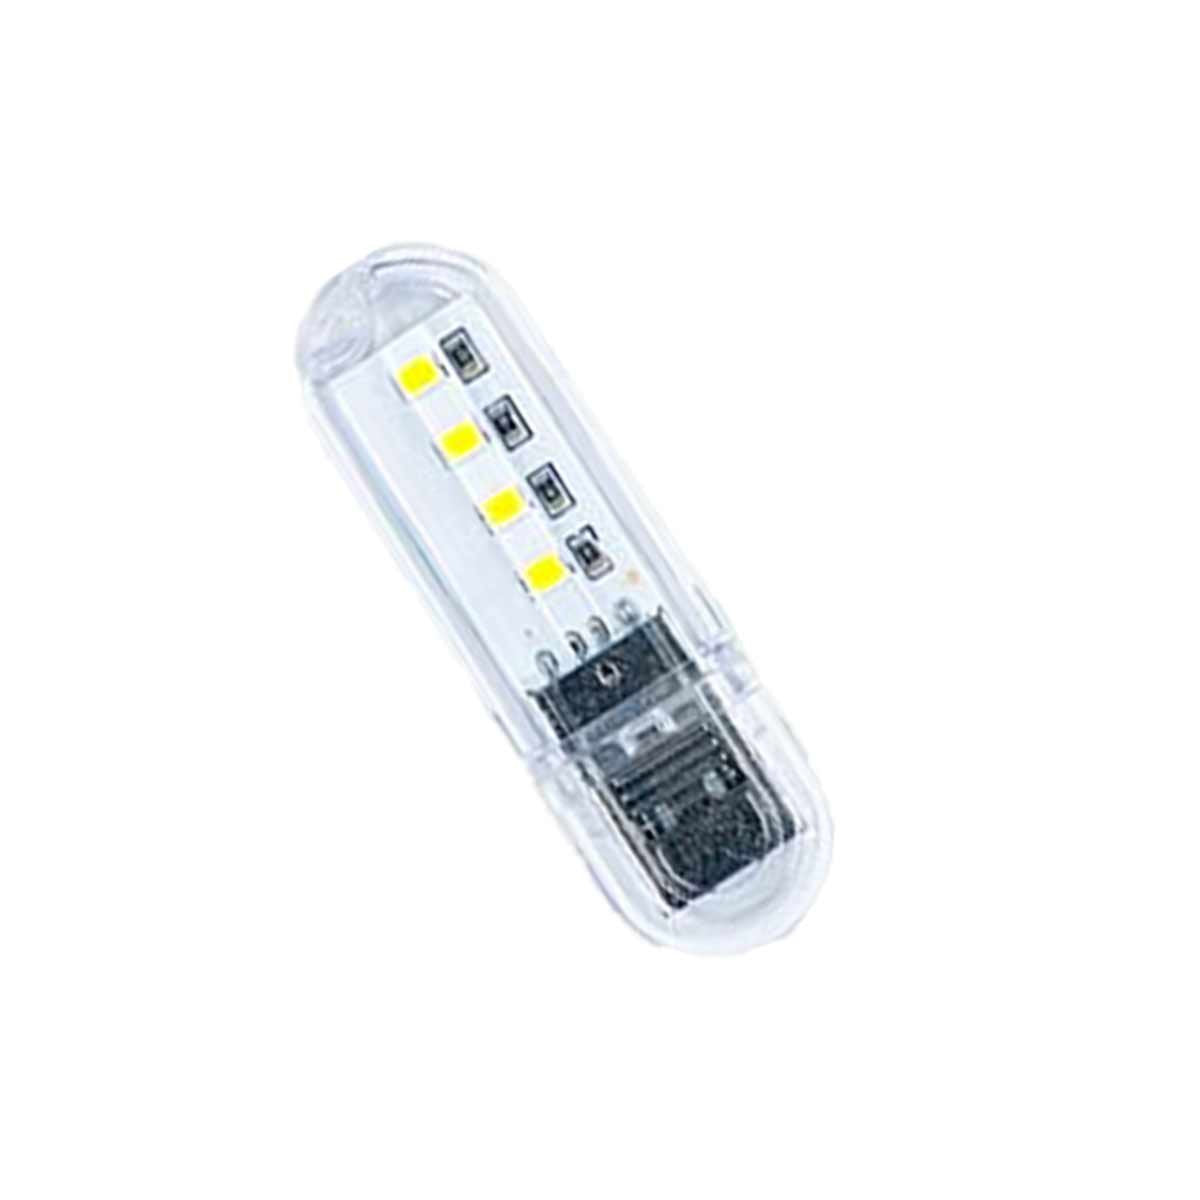 2 pcs Lampada Notturna Decorativa USB a LED Portatile 0.8W 59LM Luce Calda 3000K